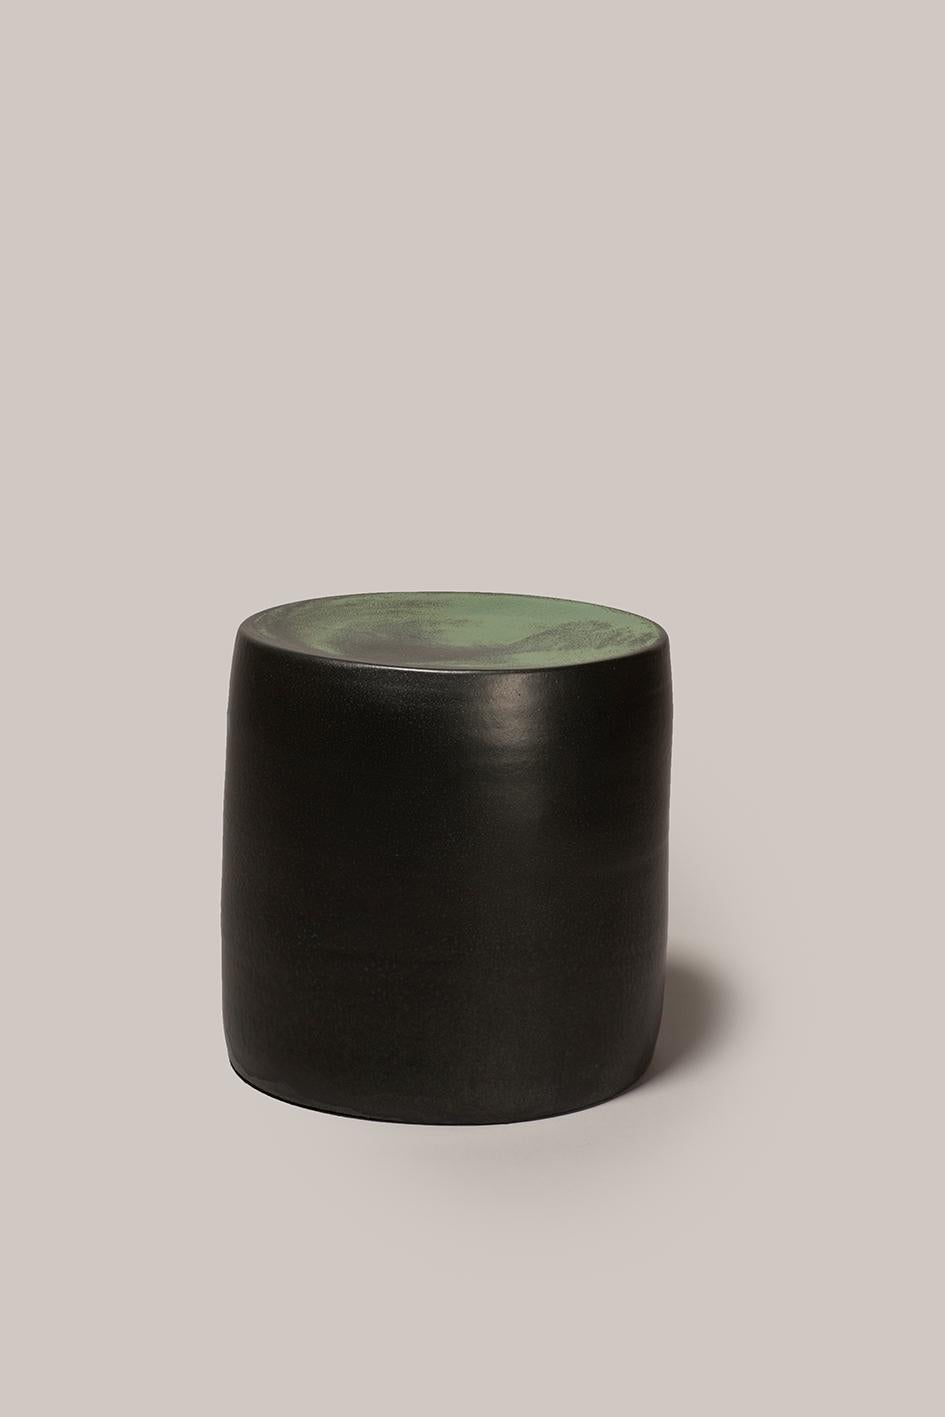 Spanish Contemporary Ceramic Side Table Column Stool Black Dark Green Glazed Stoneware